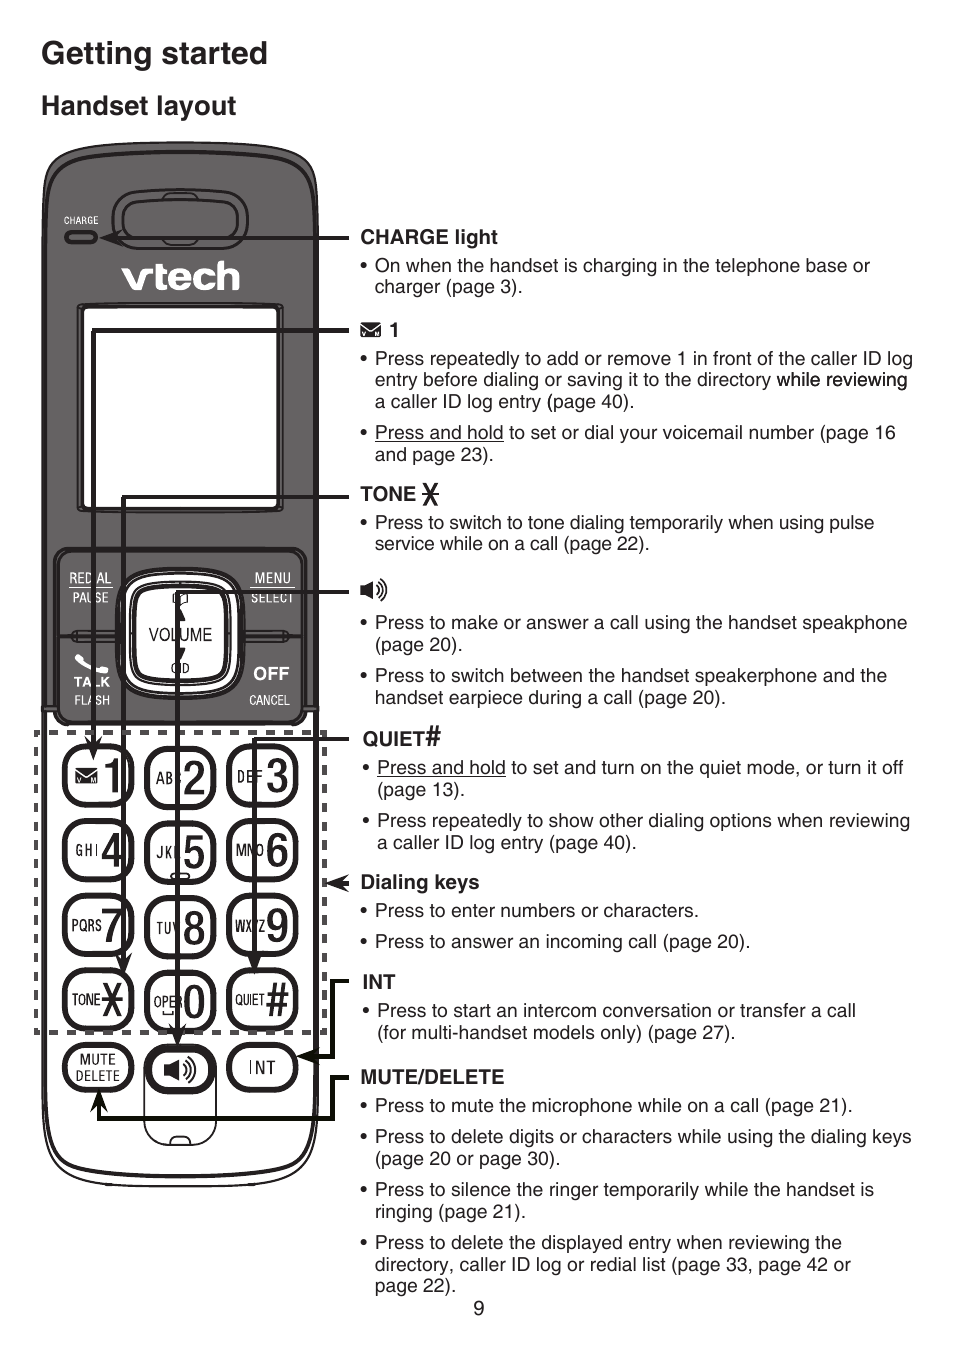 Getting started, Handset layout | VTech CS6719-2 Manual User Manual